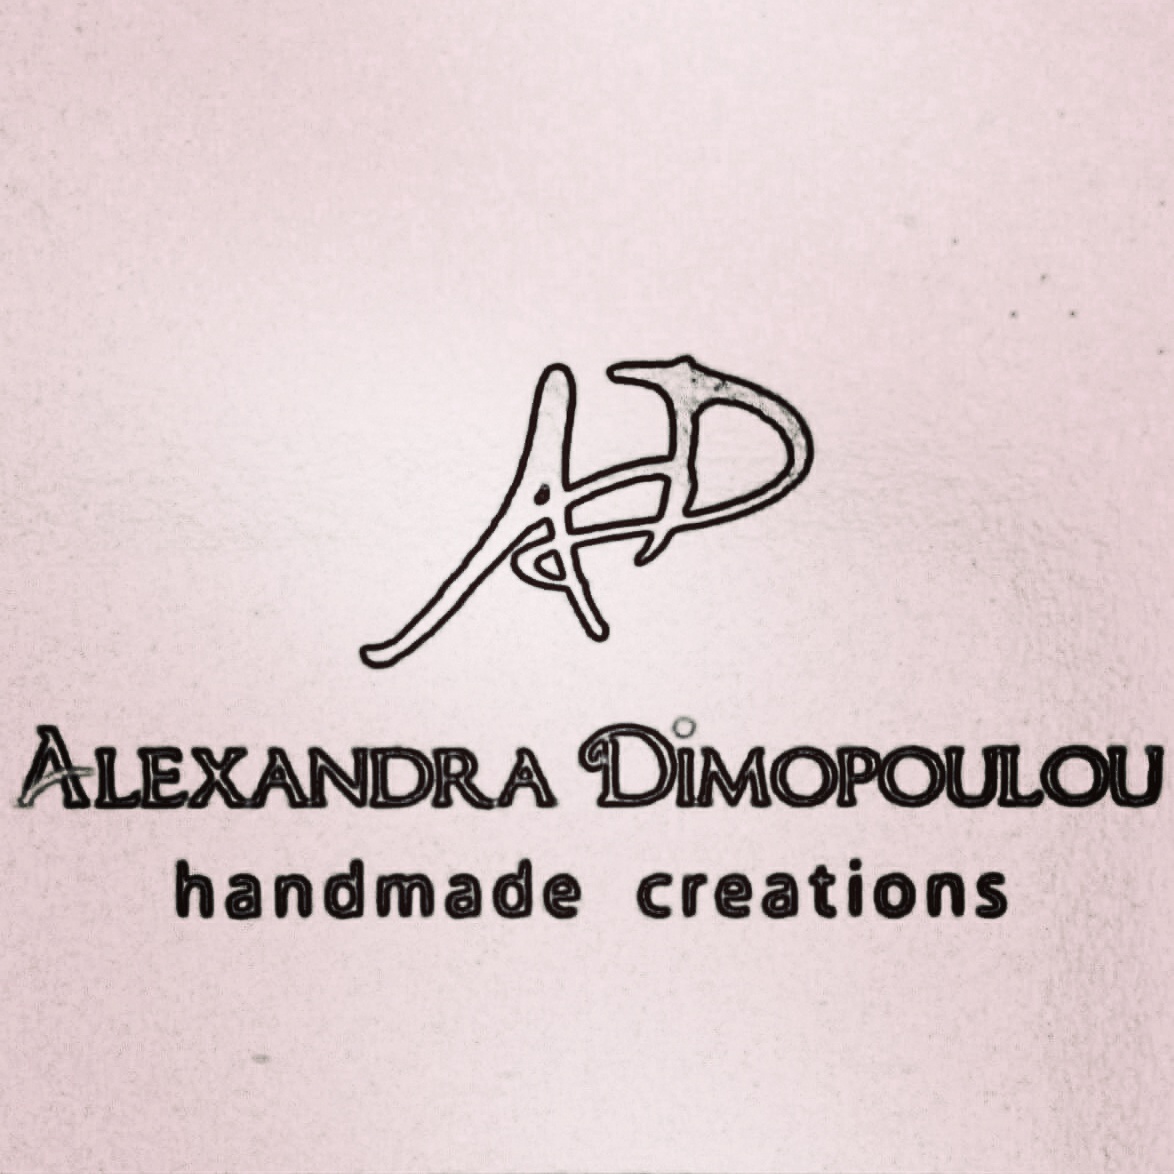 Ad handmade creations - Αλεξάνδρα Δημοπουλου, Μπομπονιέρες